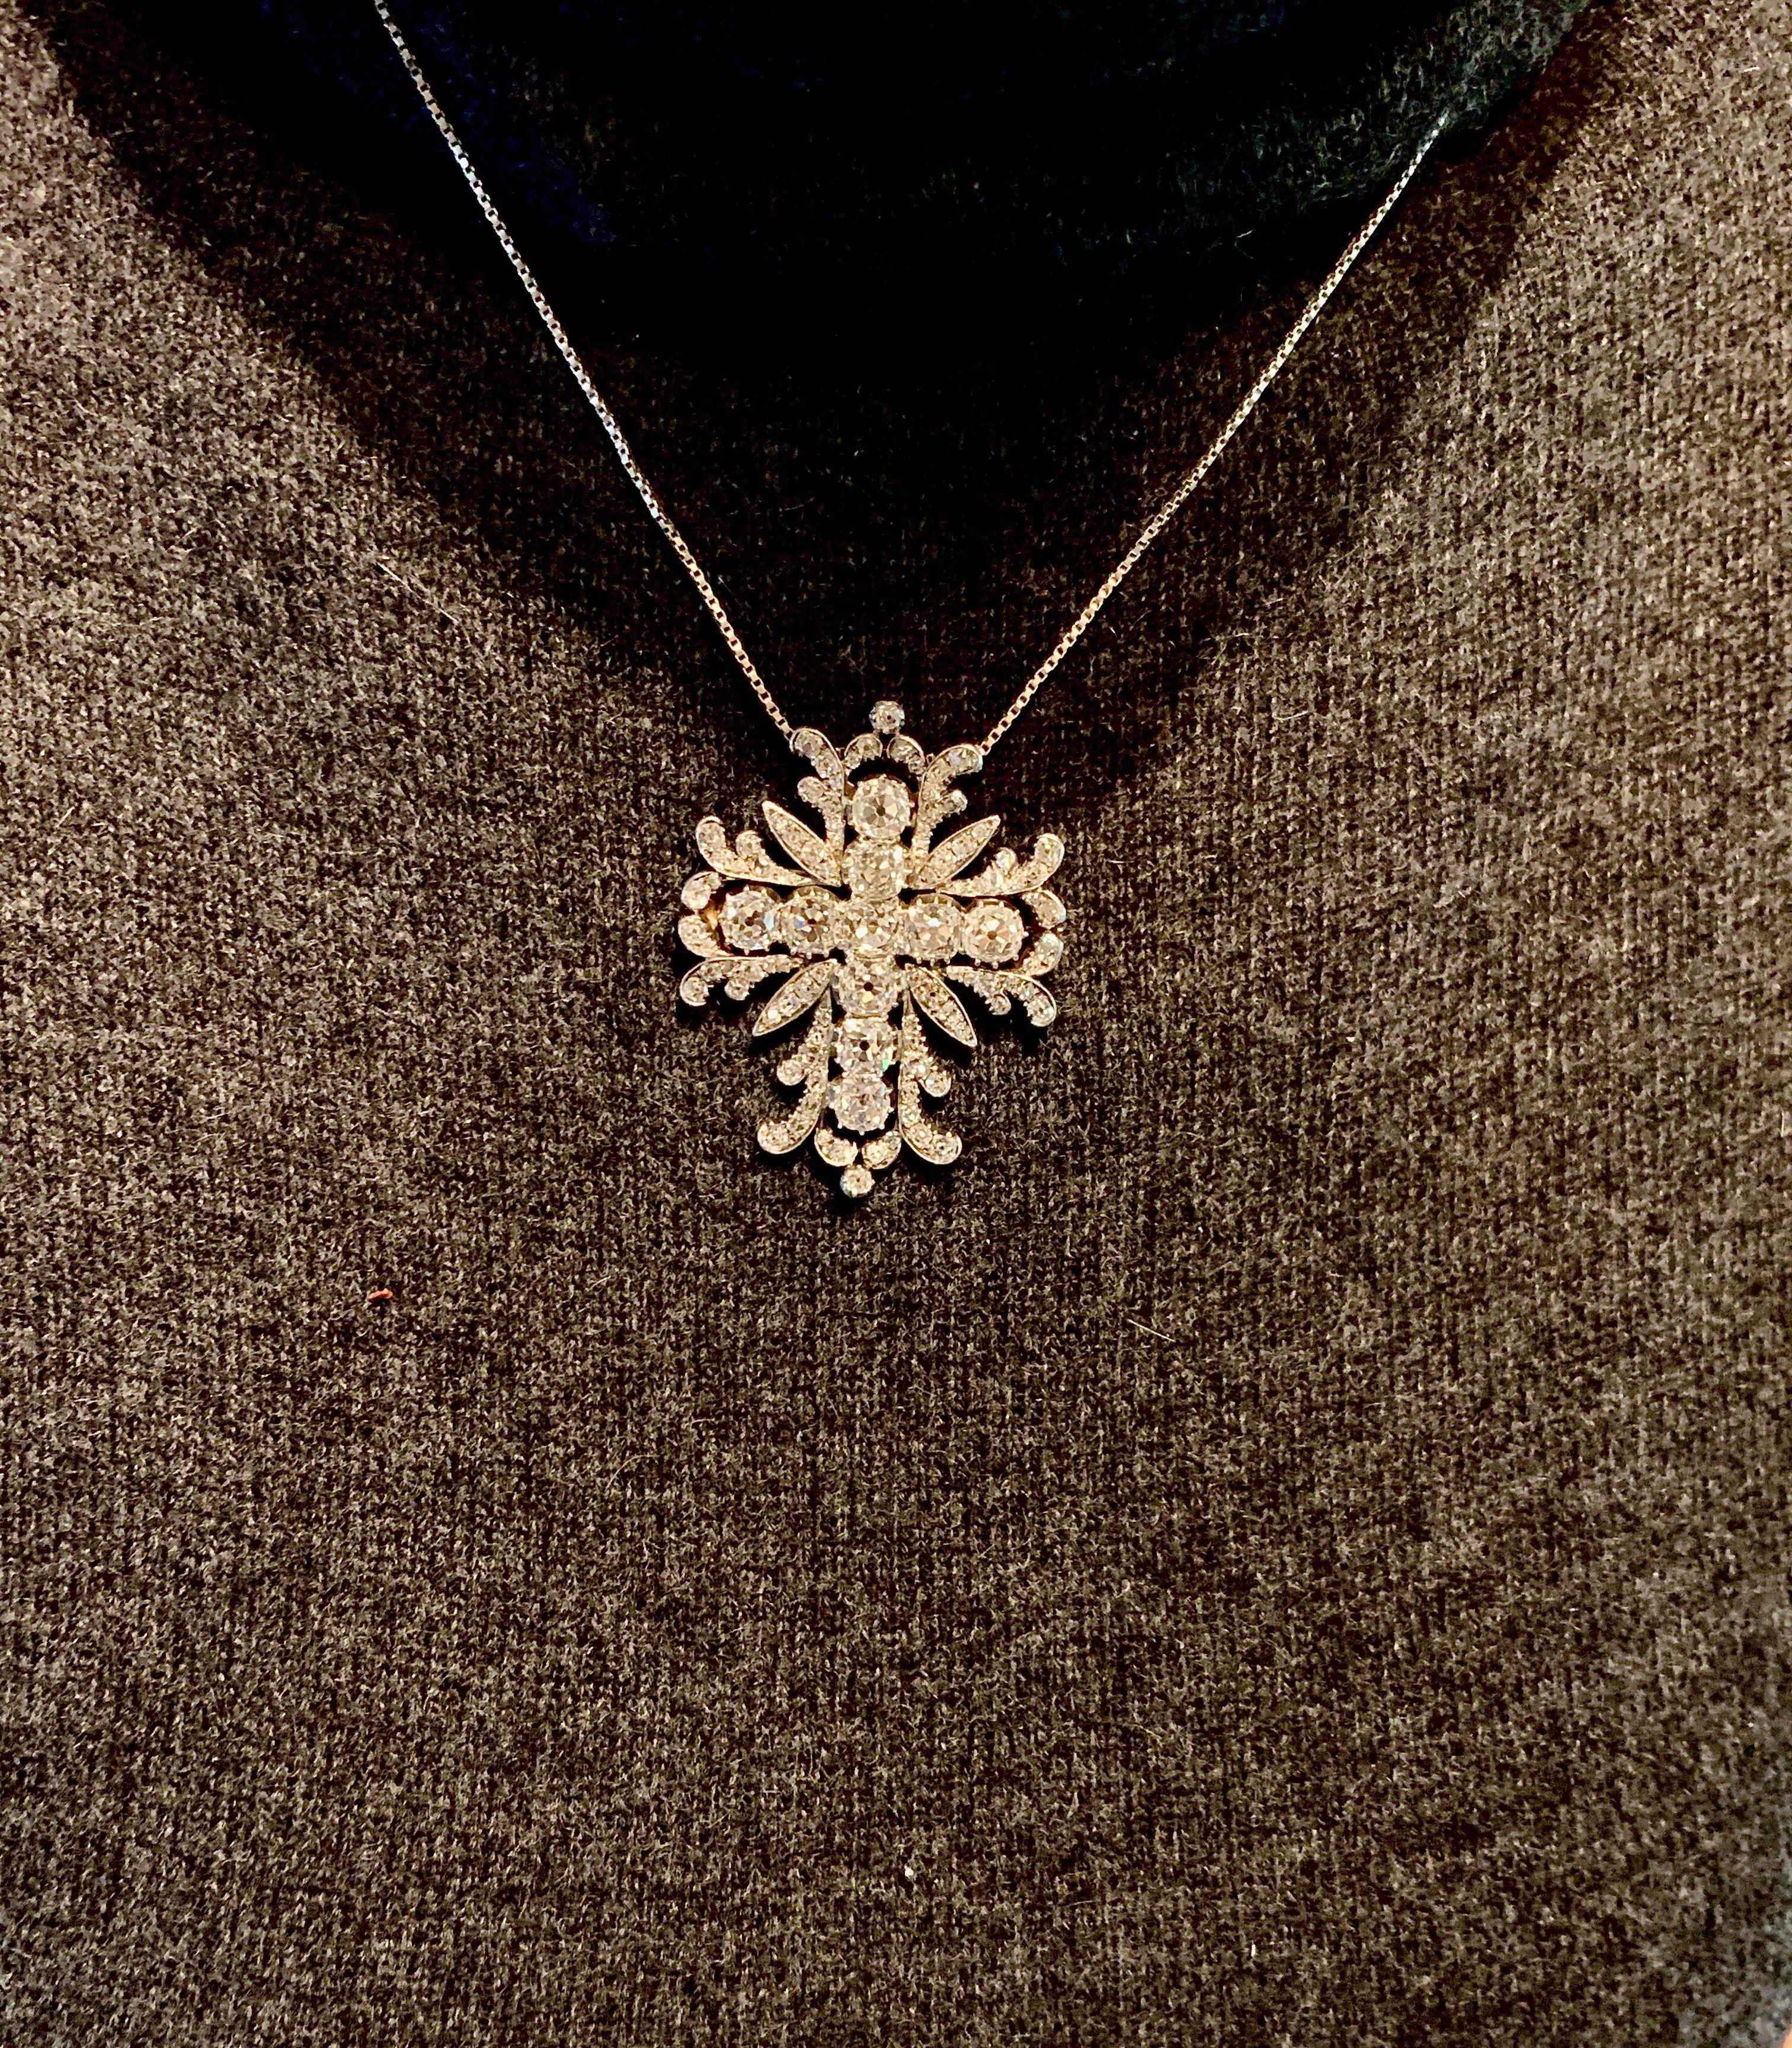 Gemolithos, Victorian, Early 19th Century Diamond Cross Brooch-Pendant In Good Condition For Sale In Munich, DE